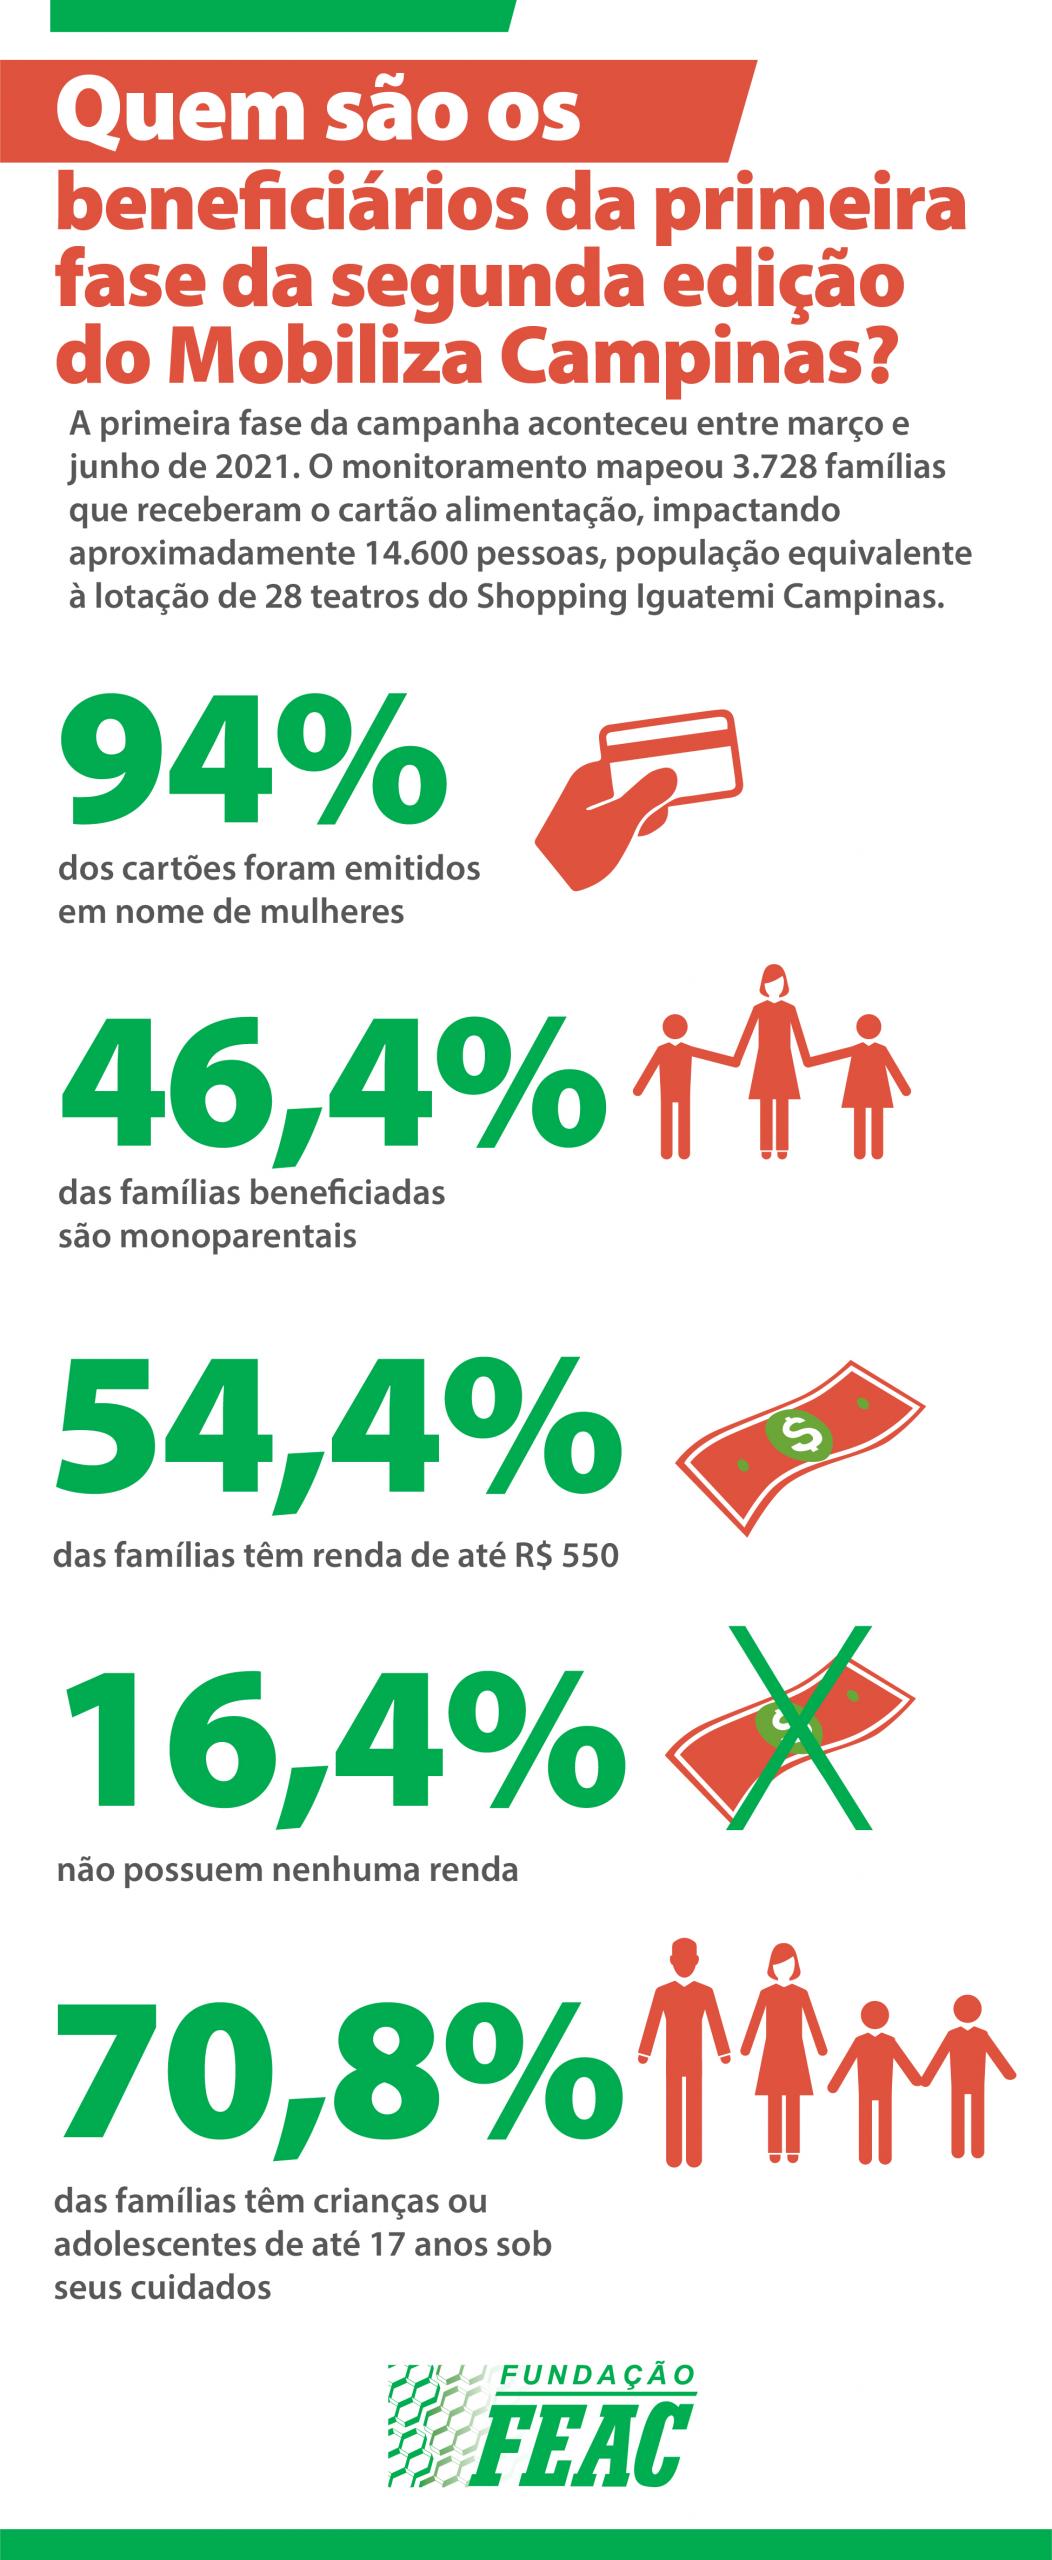 Mobiliza Campinas - infográfico apresenta o perfil dos beneficiados 